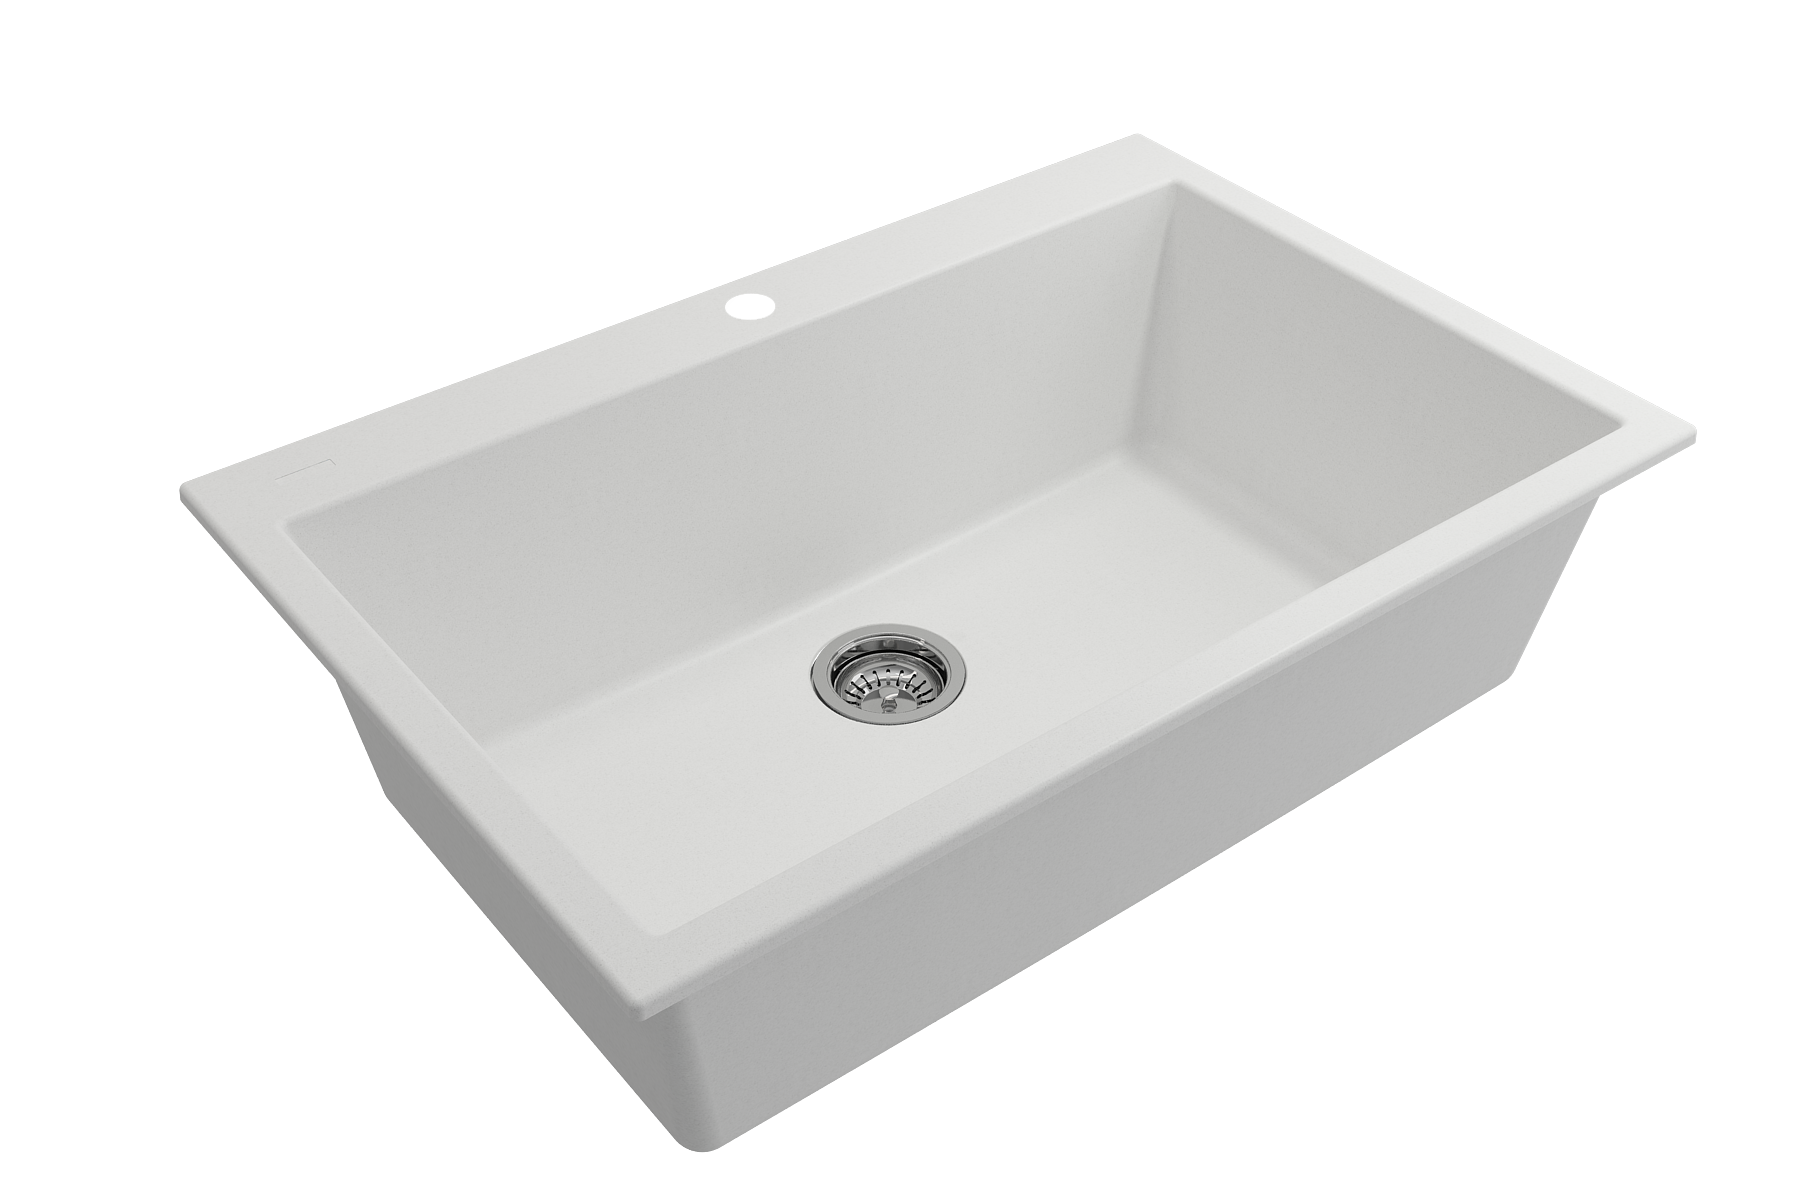 Campino Uno Dual Mount Granite Composite 33 in. Single Bowl Kitchen Sink with Strainer in Milk White